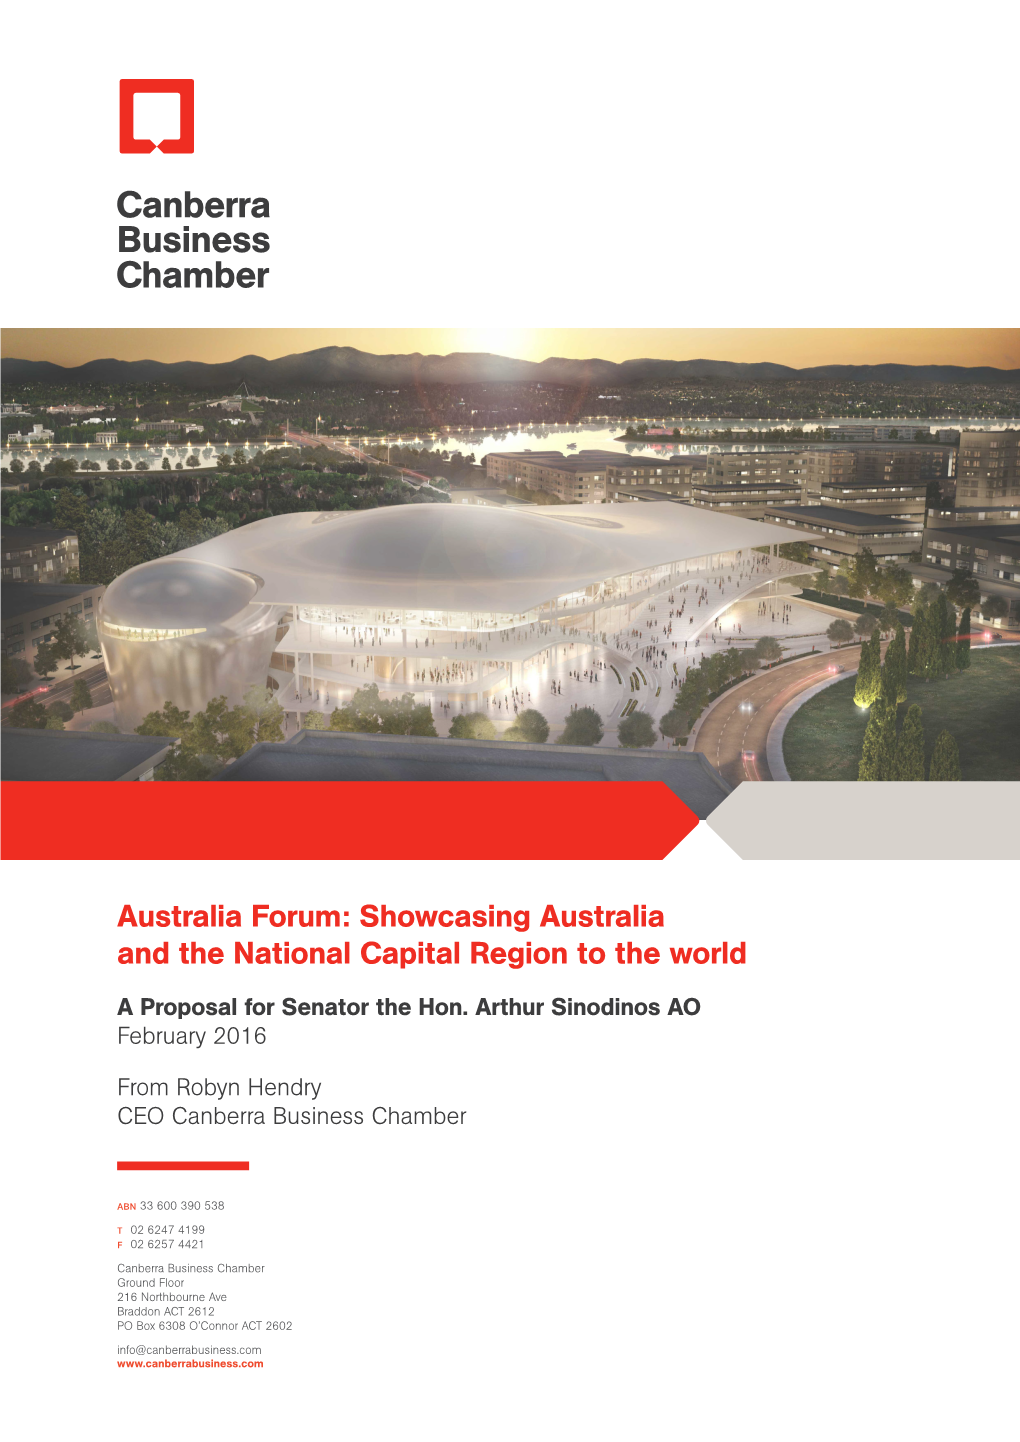 Australia Forum: Showcasing Australia and the National Capital Region to the World